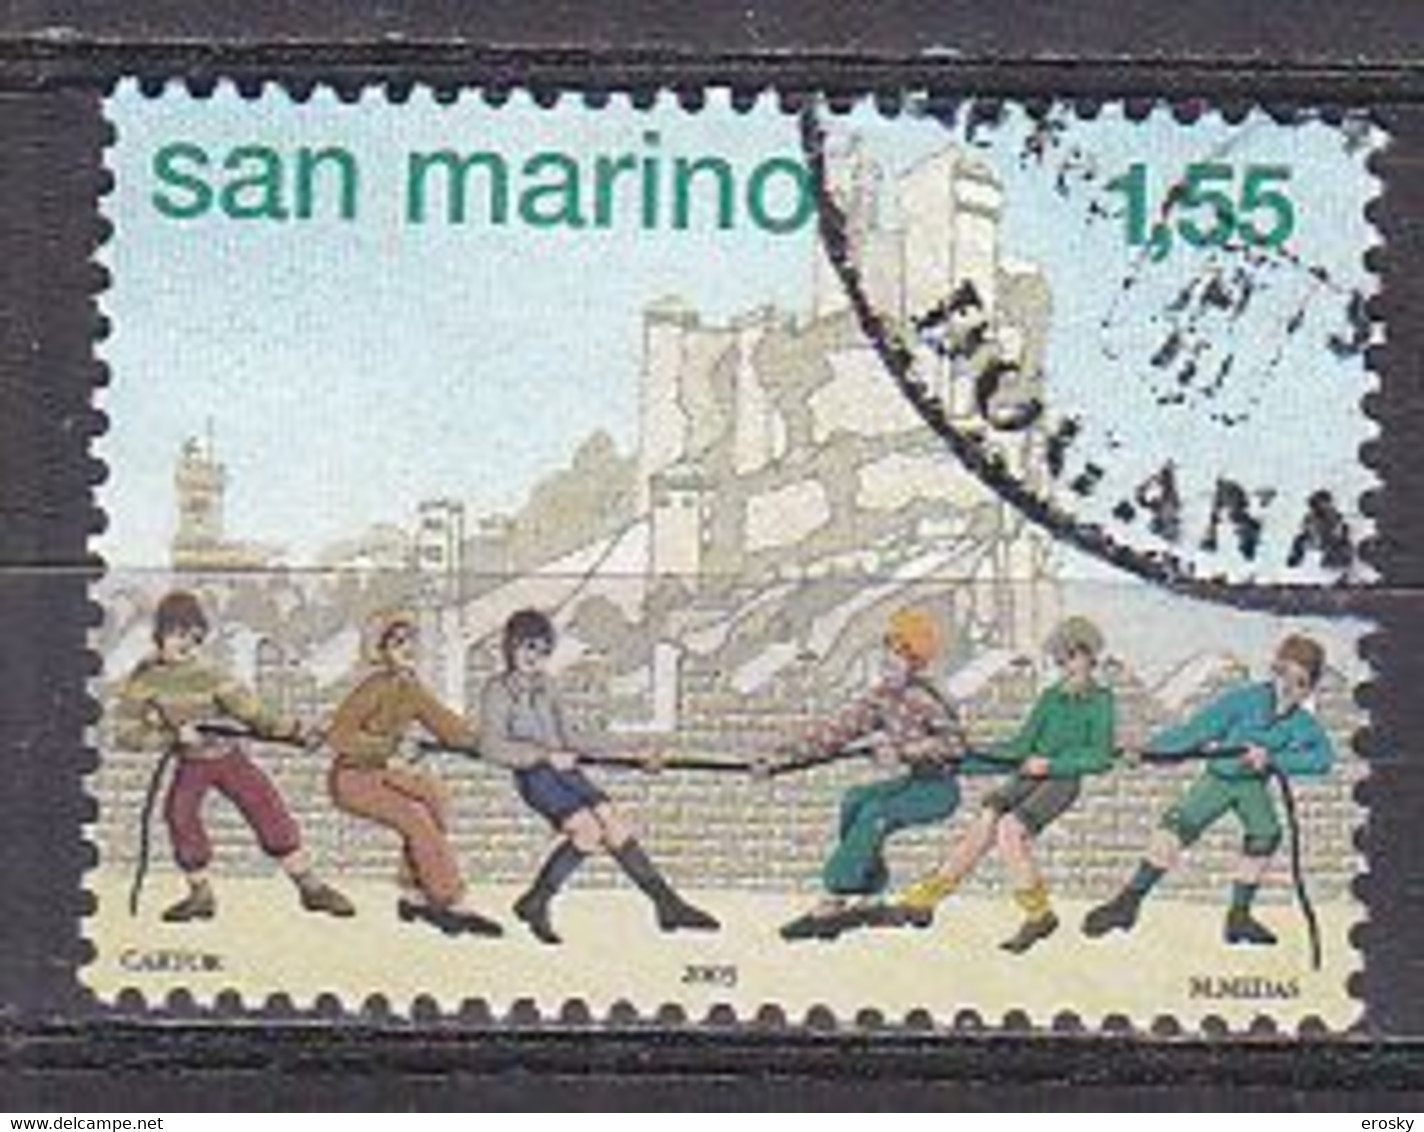 Y9006 - SAN MARINO Ss N°1953 - SAINT-MARIN Yv N°1911 - Used Stamps